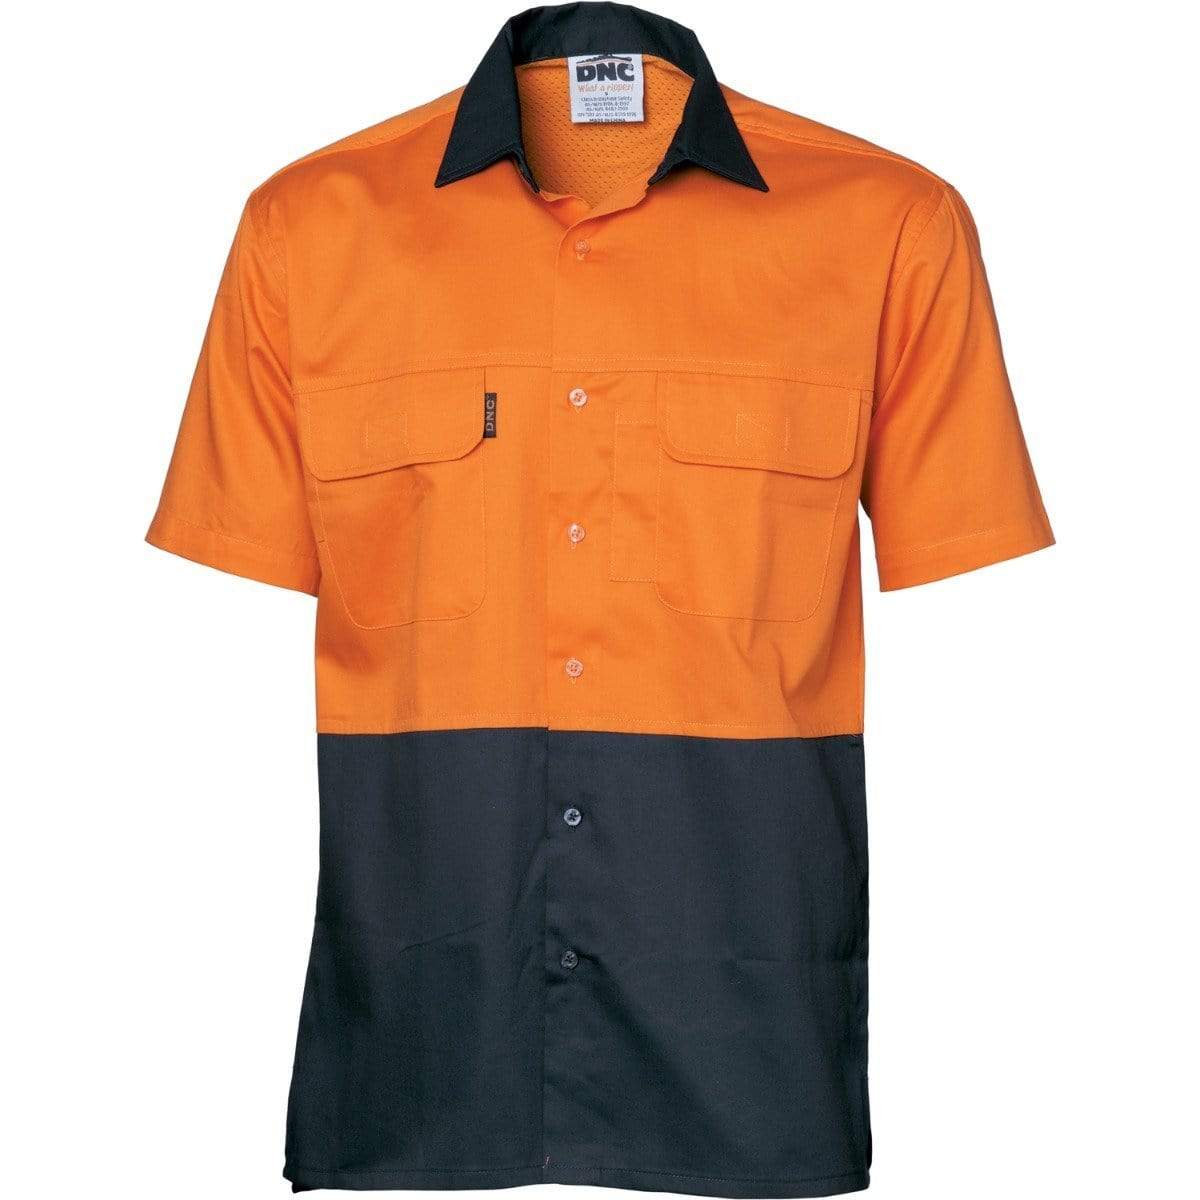 Dnc Workwear Hi-vis 3 Way Cool-breeze Short Sleeve Cotton Shirt - 3937 Work Wear DNC Workwear Orange/Navy 5XL 